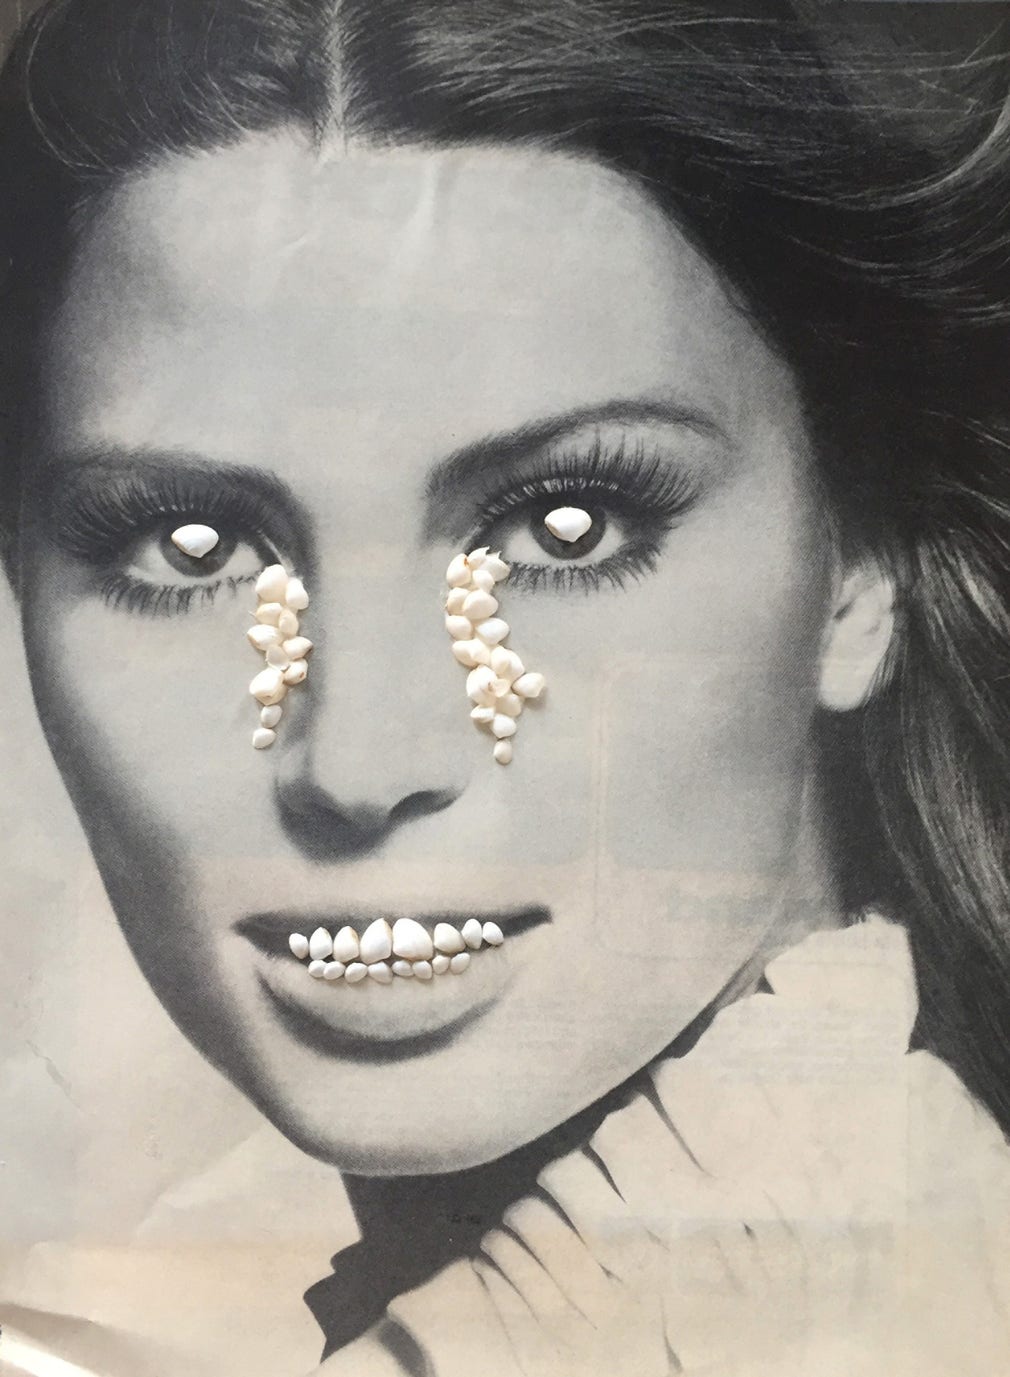 Lotta Antonssons collage ”Seashell tears”, första pris i SAK:s konstlotteri 2019